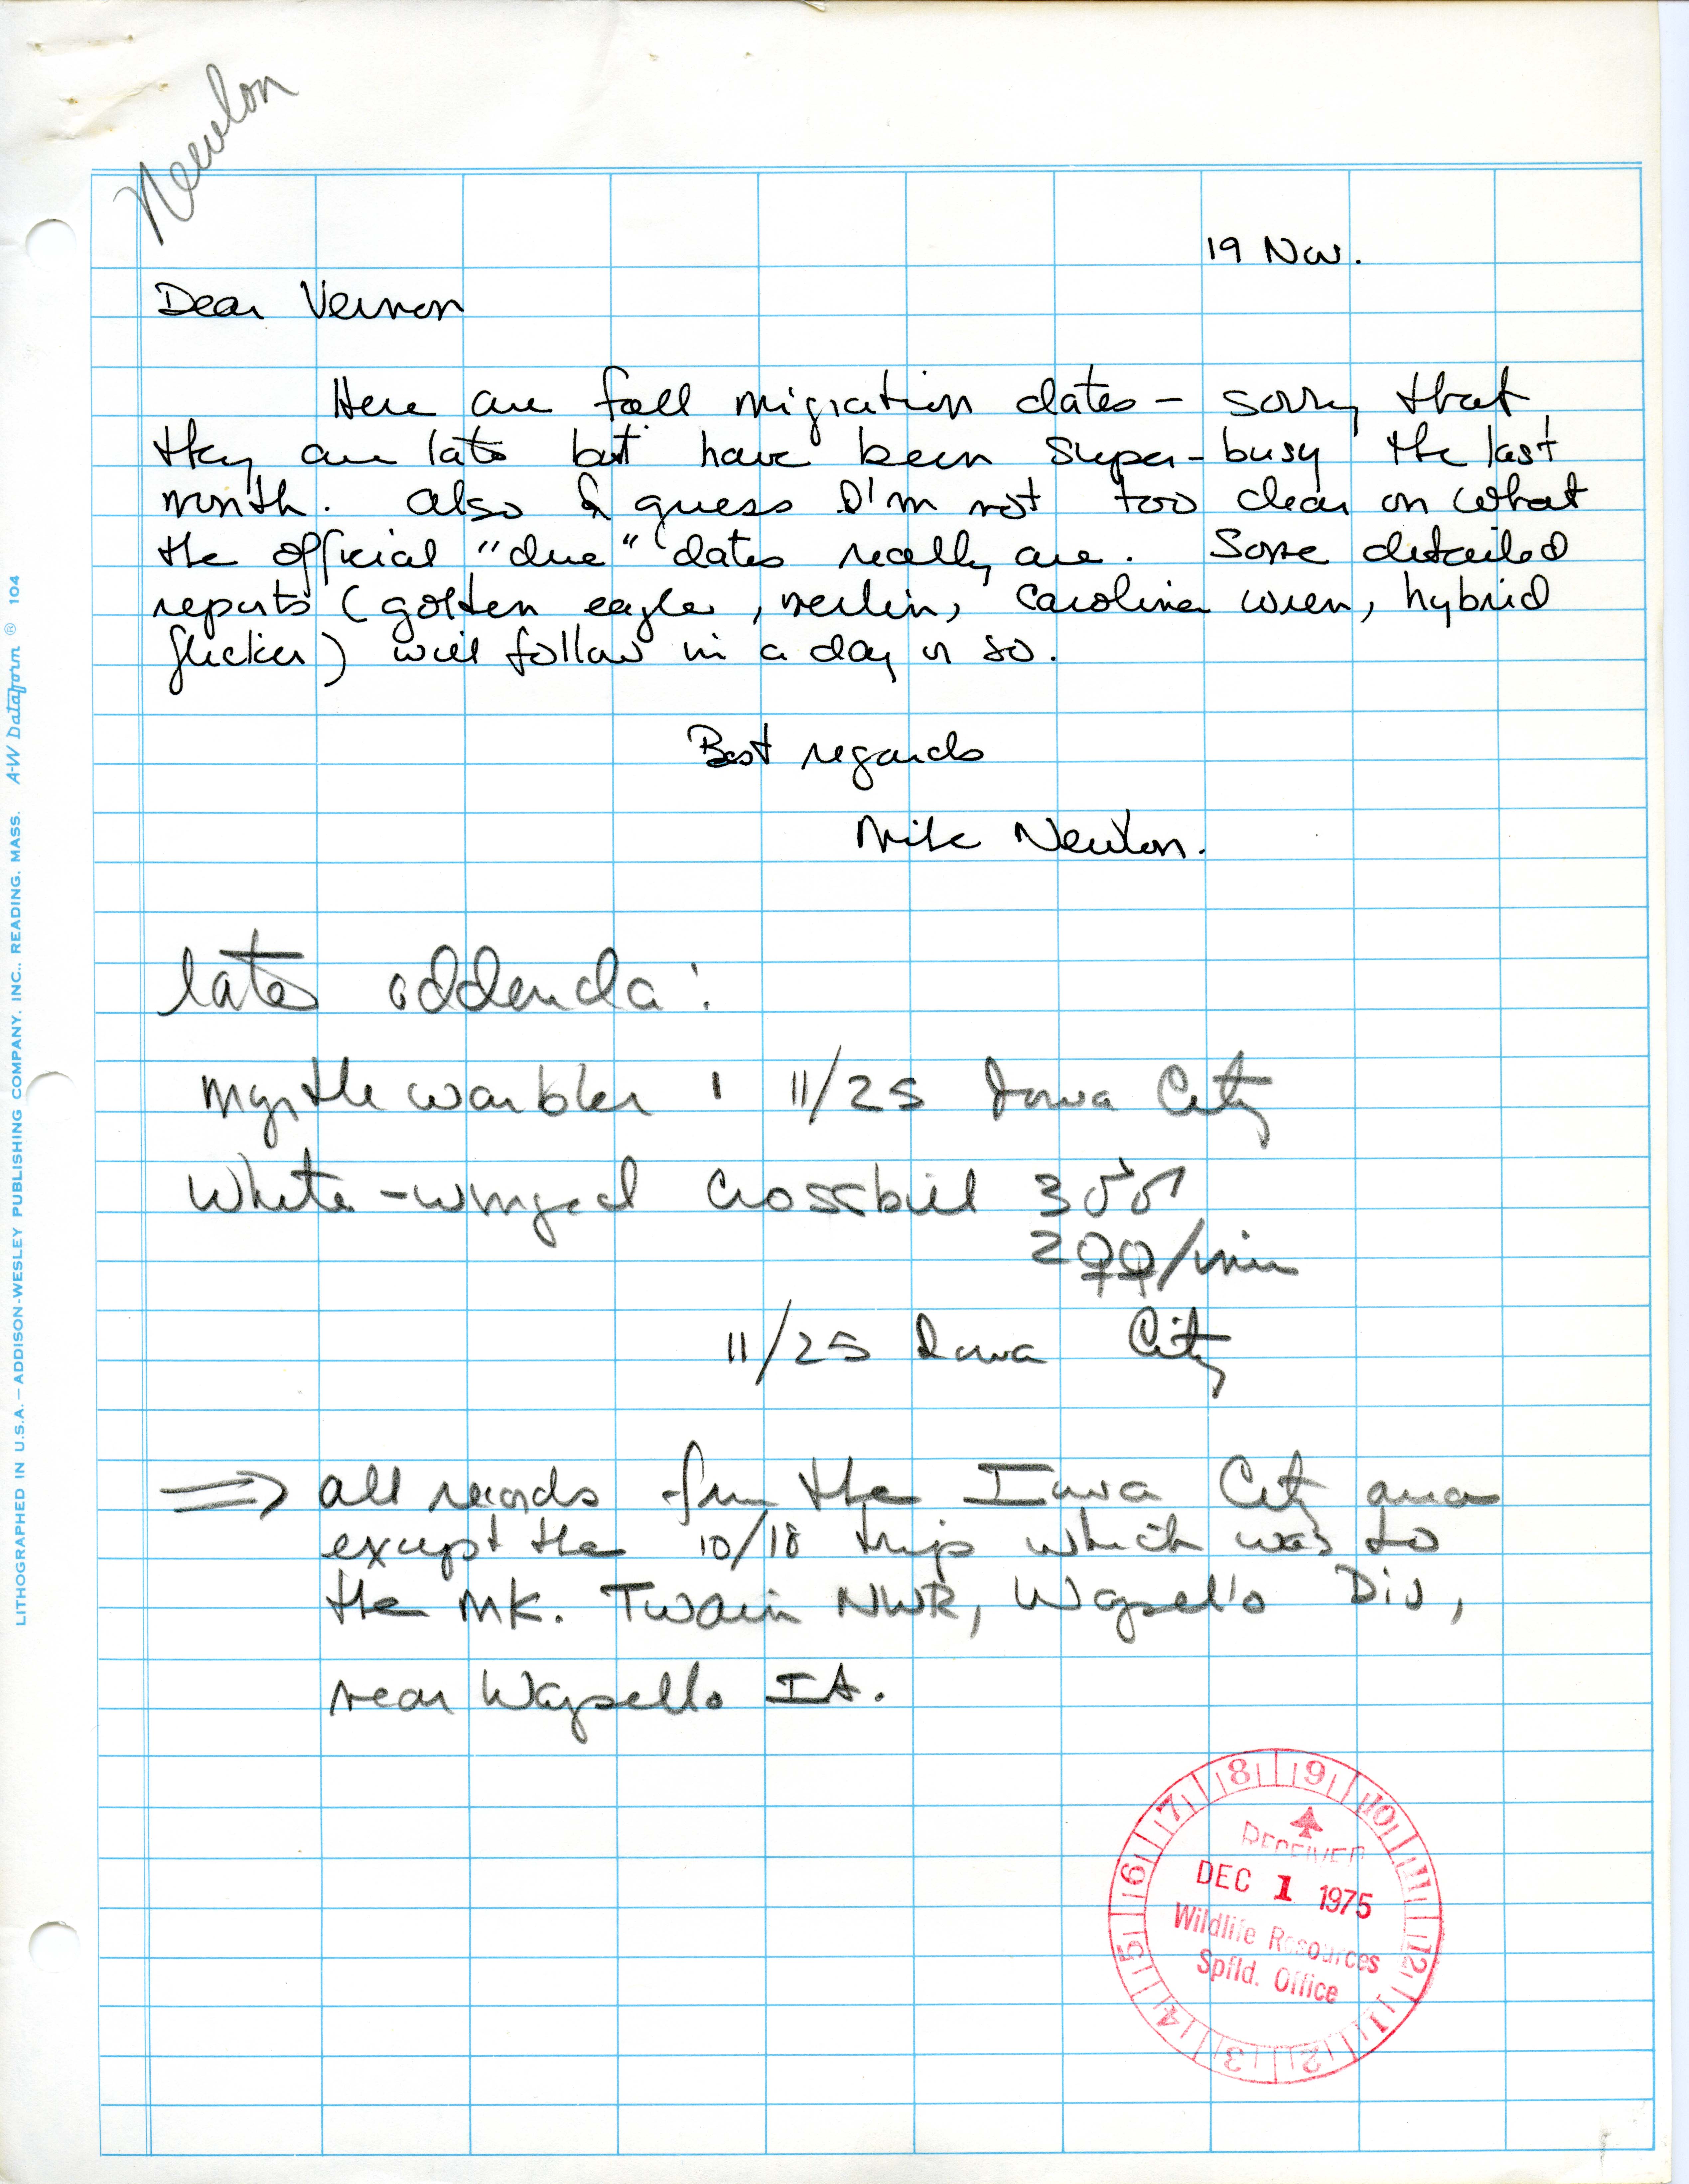 Michael C. Newlon letter and notes to Vernon M. Kleen regarding fall migration, November 19, 1975